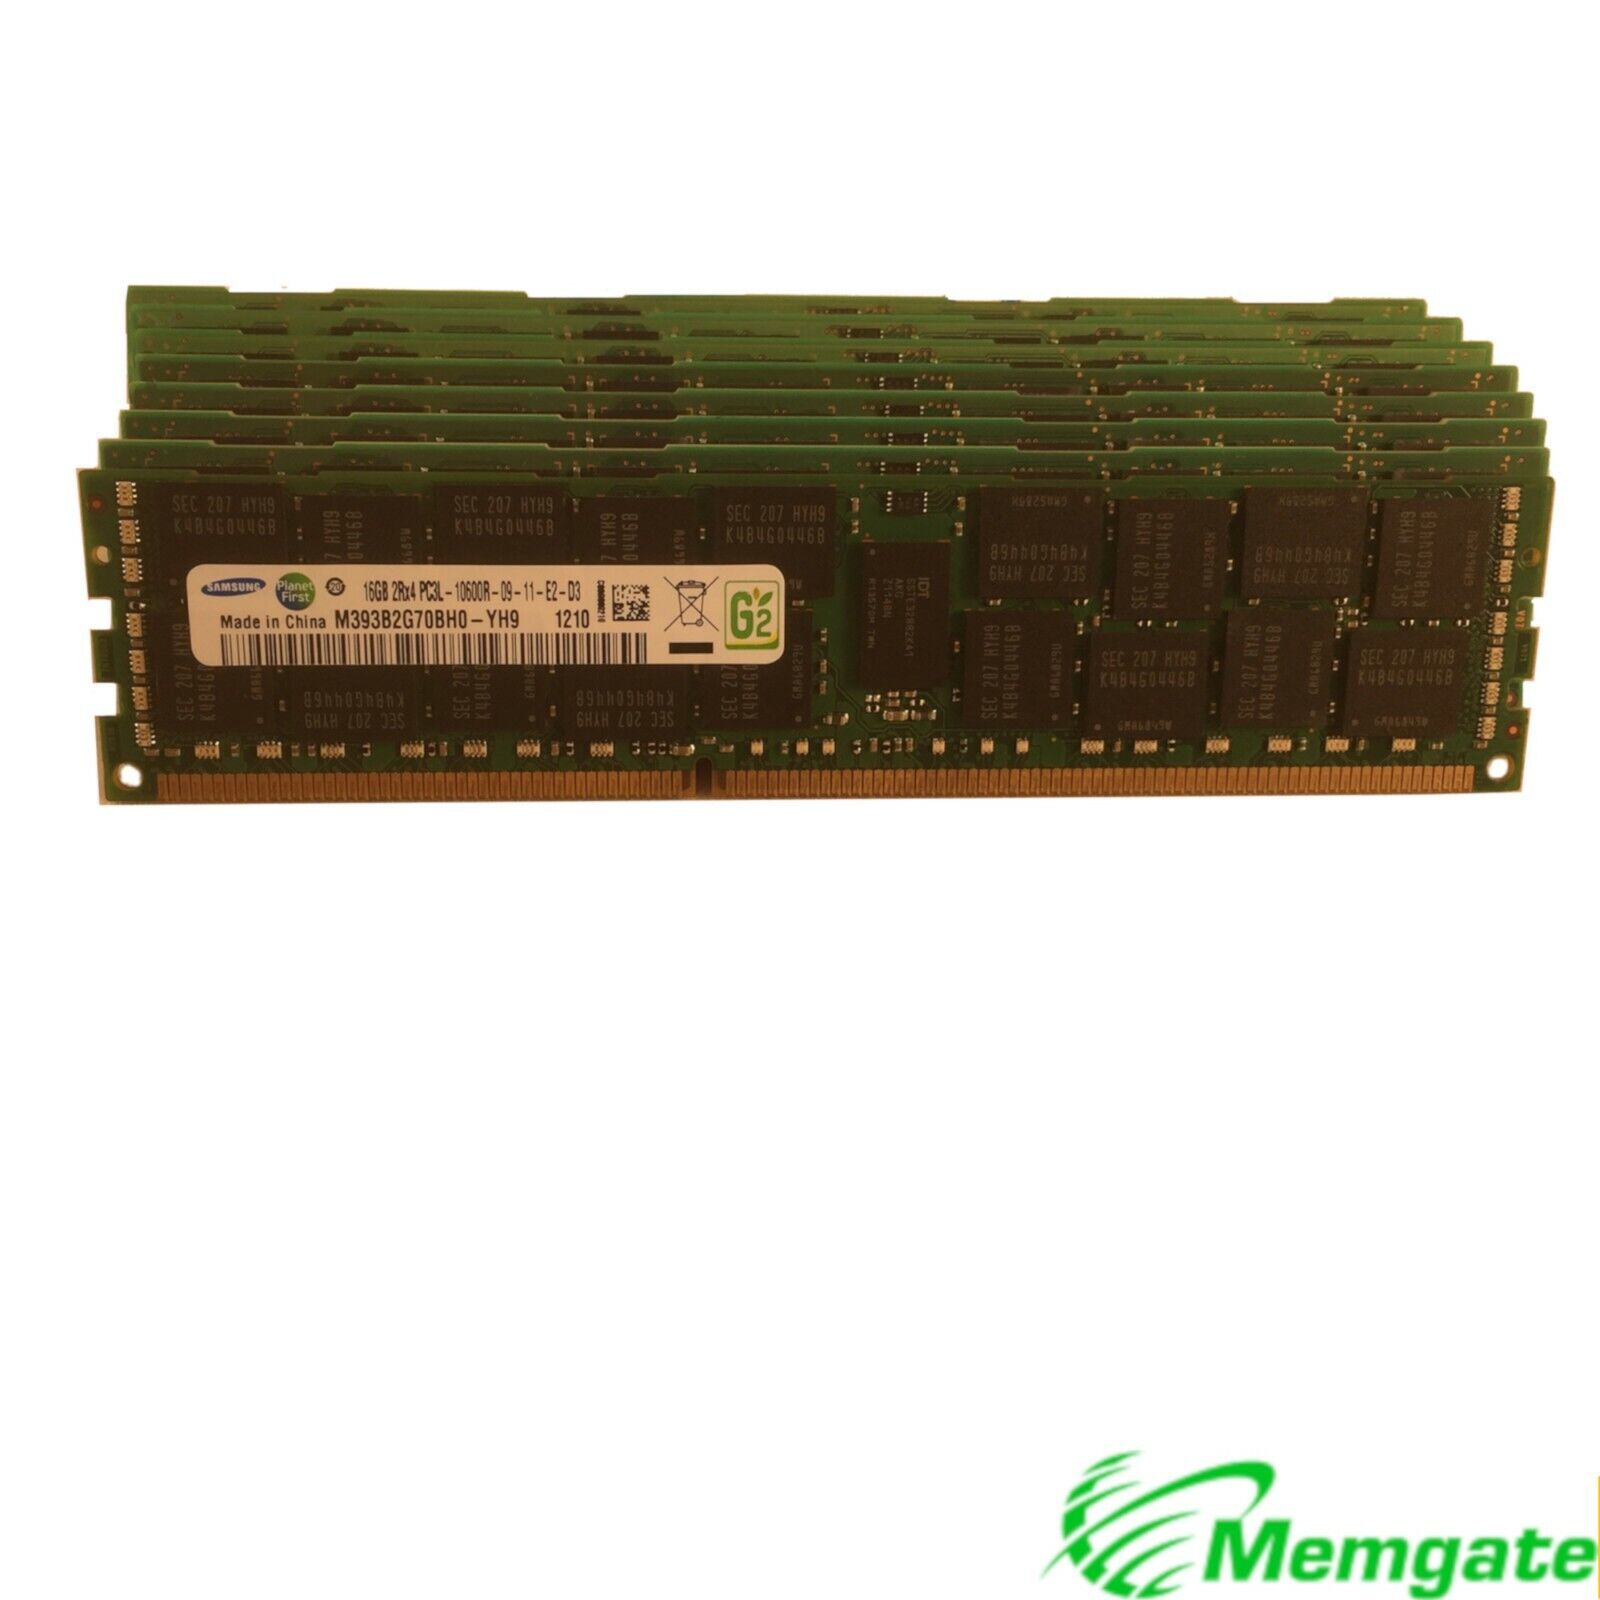 128GB (8x16GB) DDR3 -1333 ECC Reg Memory for Apple Mac Pro Mid 2010 5,1 12 Core